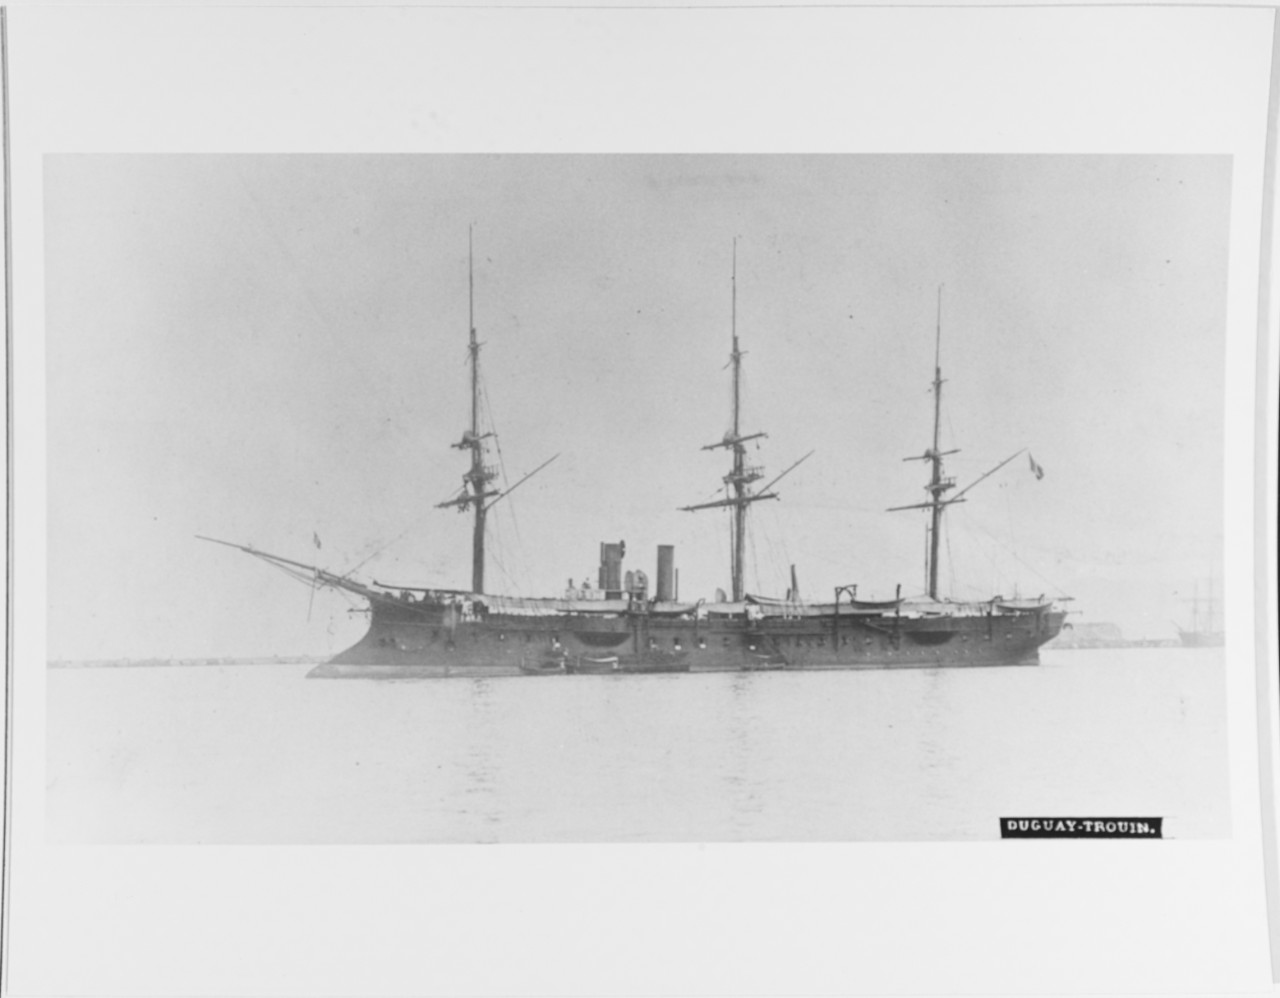 DUGUAY-TROUIN (French Cruiser, 1877-1911)